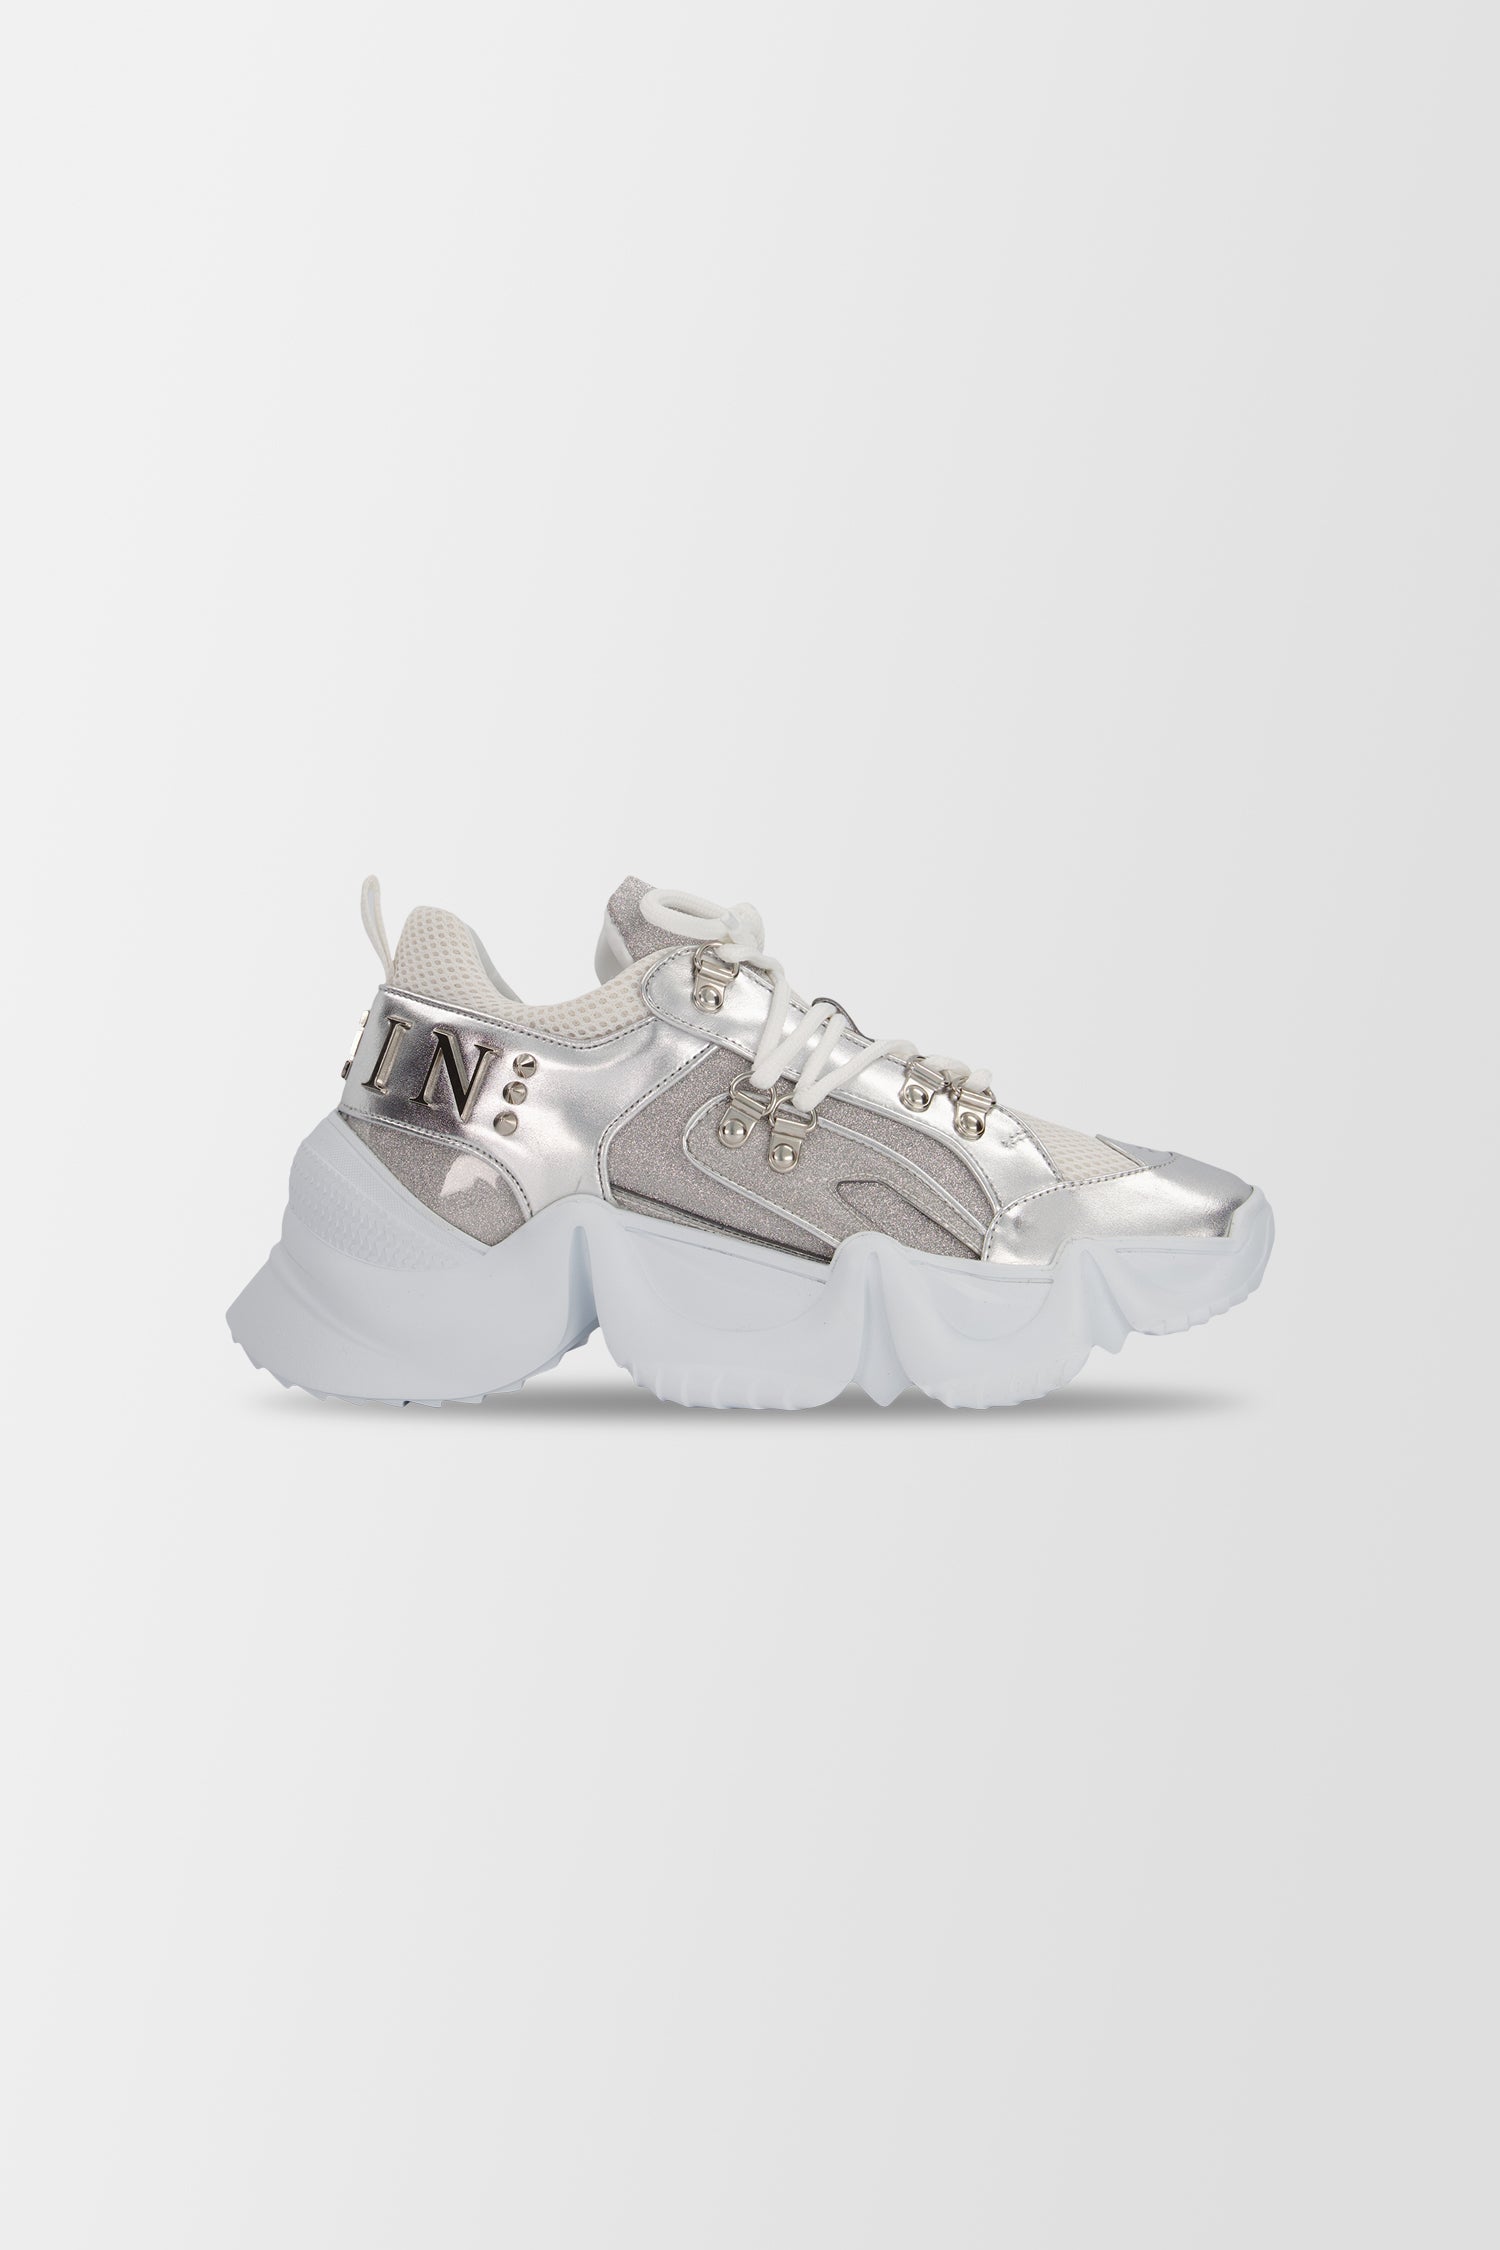 Philipp Plein Silver Crystal Sneakers